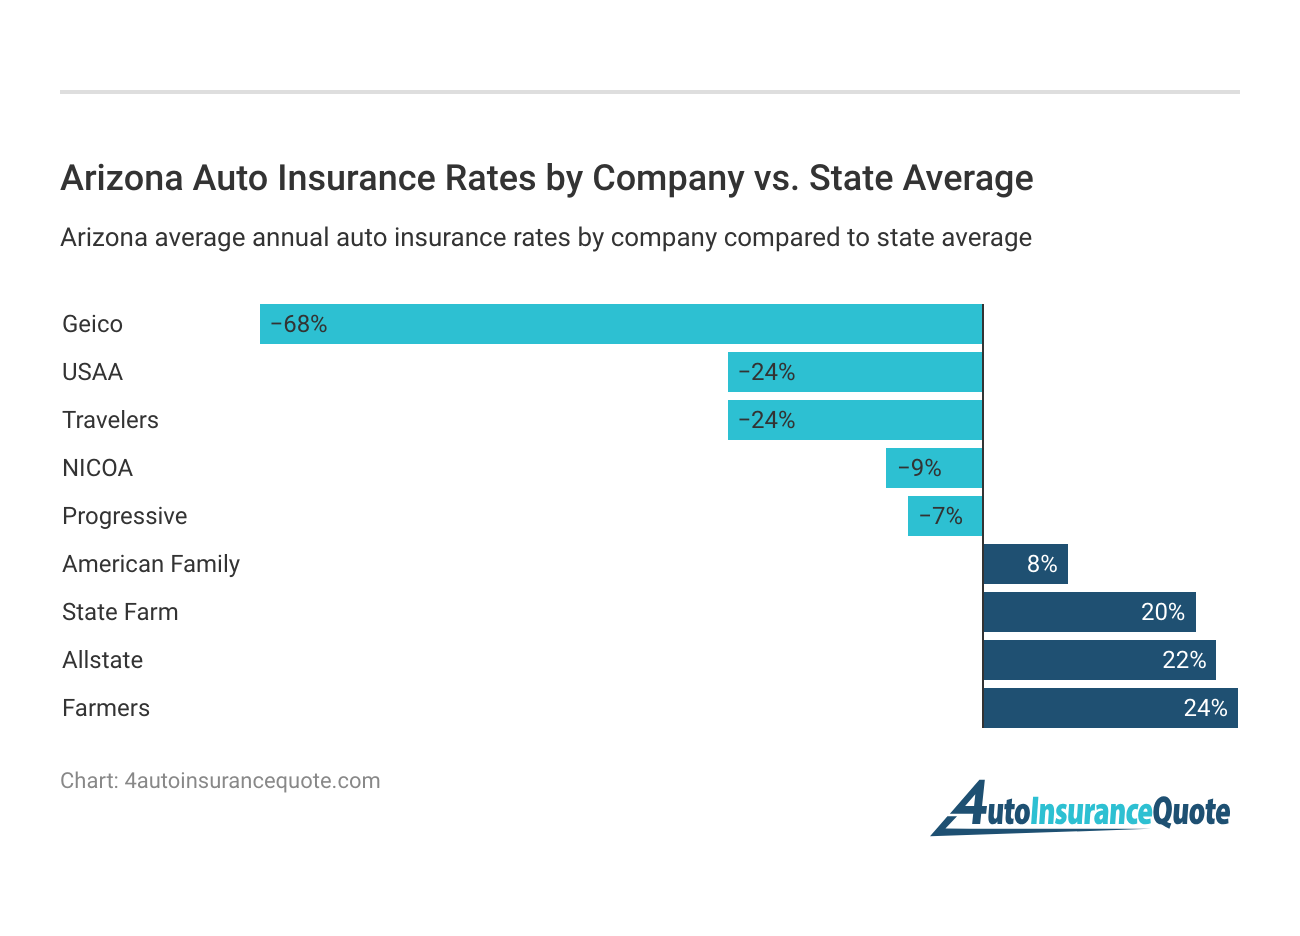 <h3>Arizona Auto Insurance Rates by Company vs. State Average</h3>